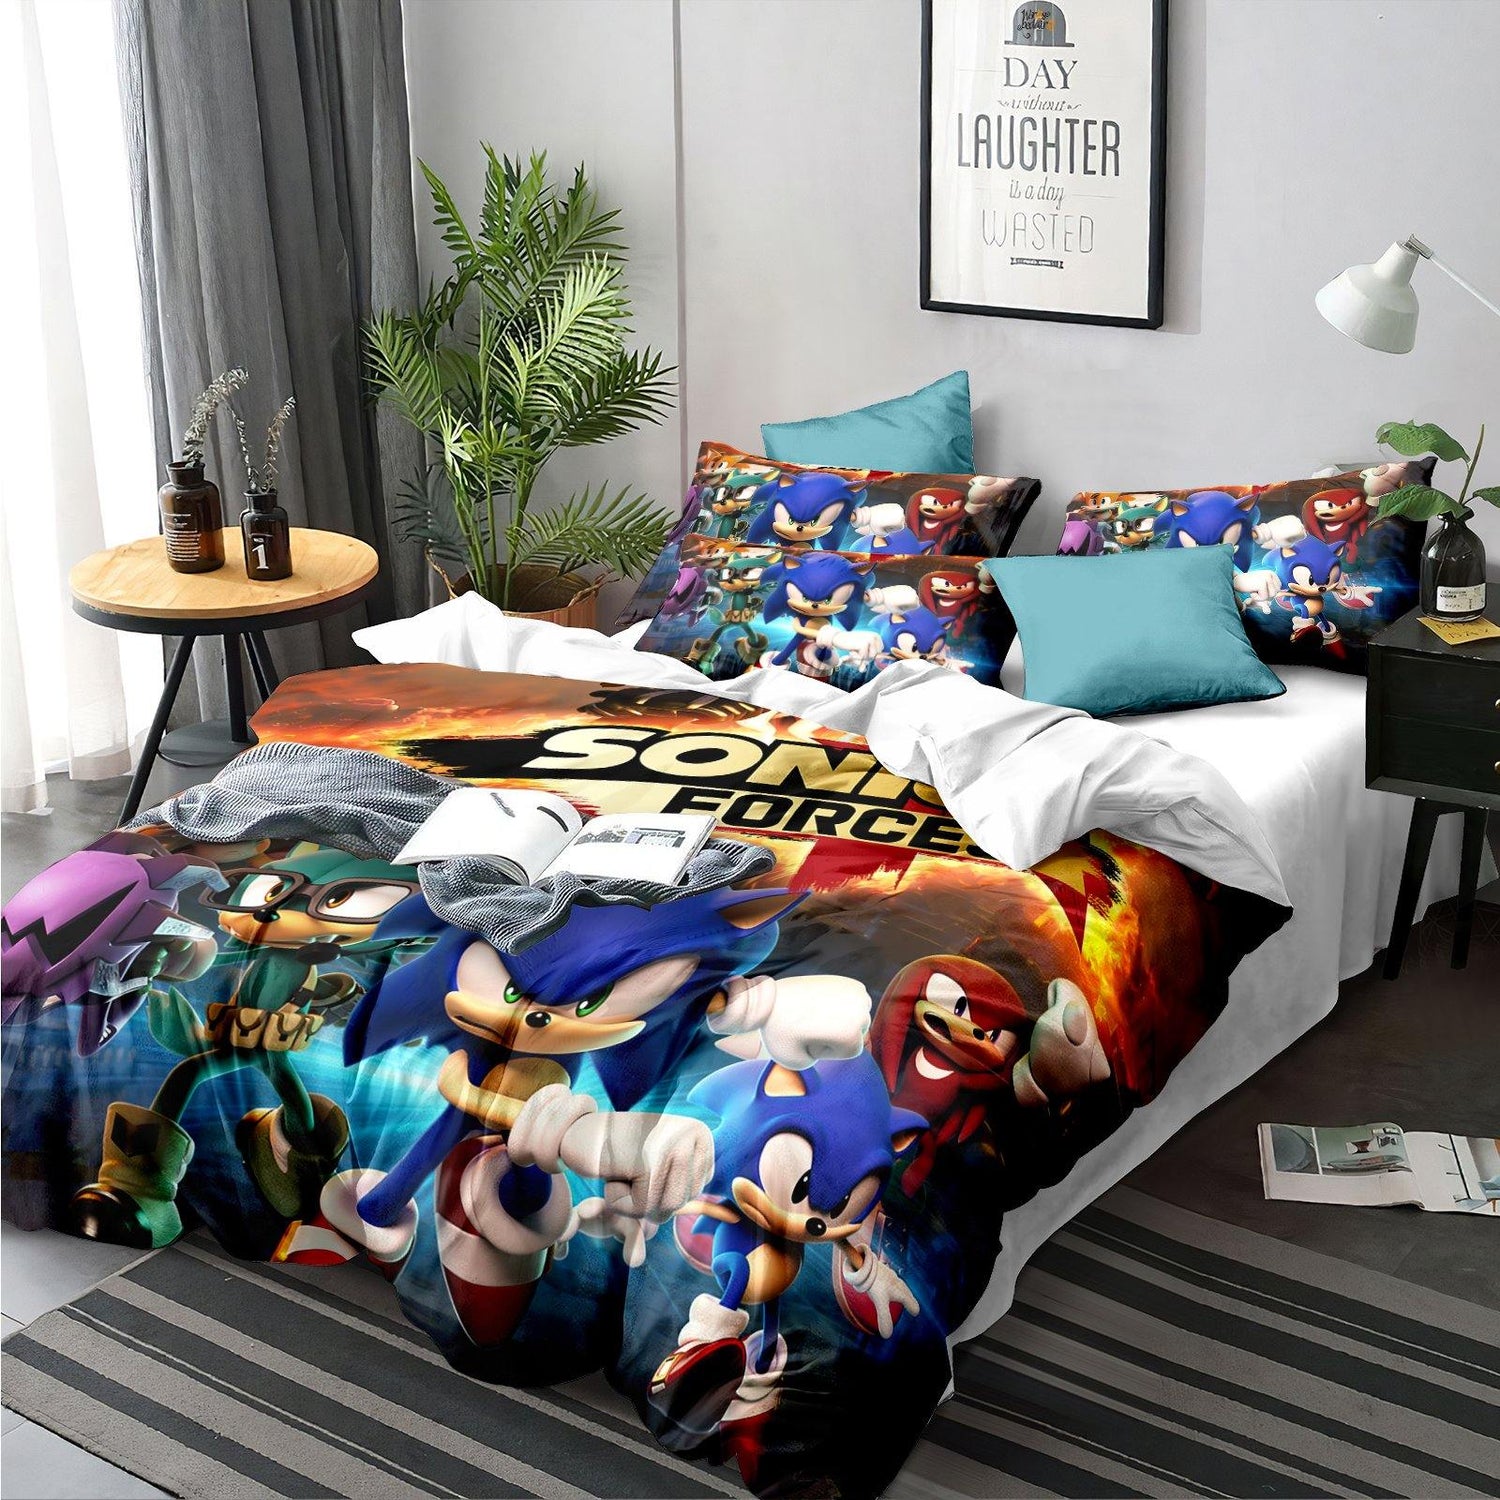 WONGS BEDDING Cartoon character Bedding Bedroom Home Kit - Wongs bedding